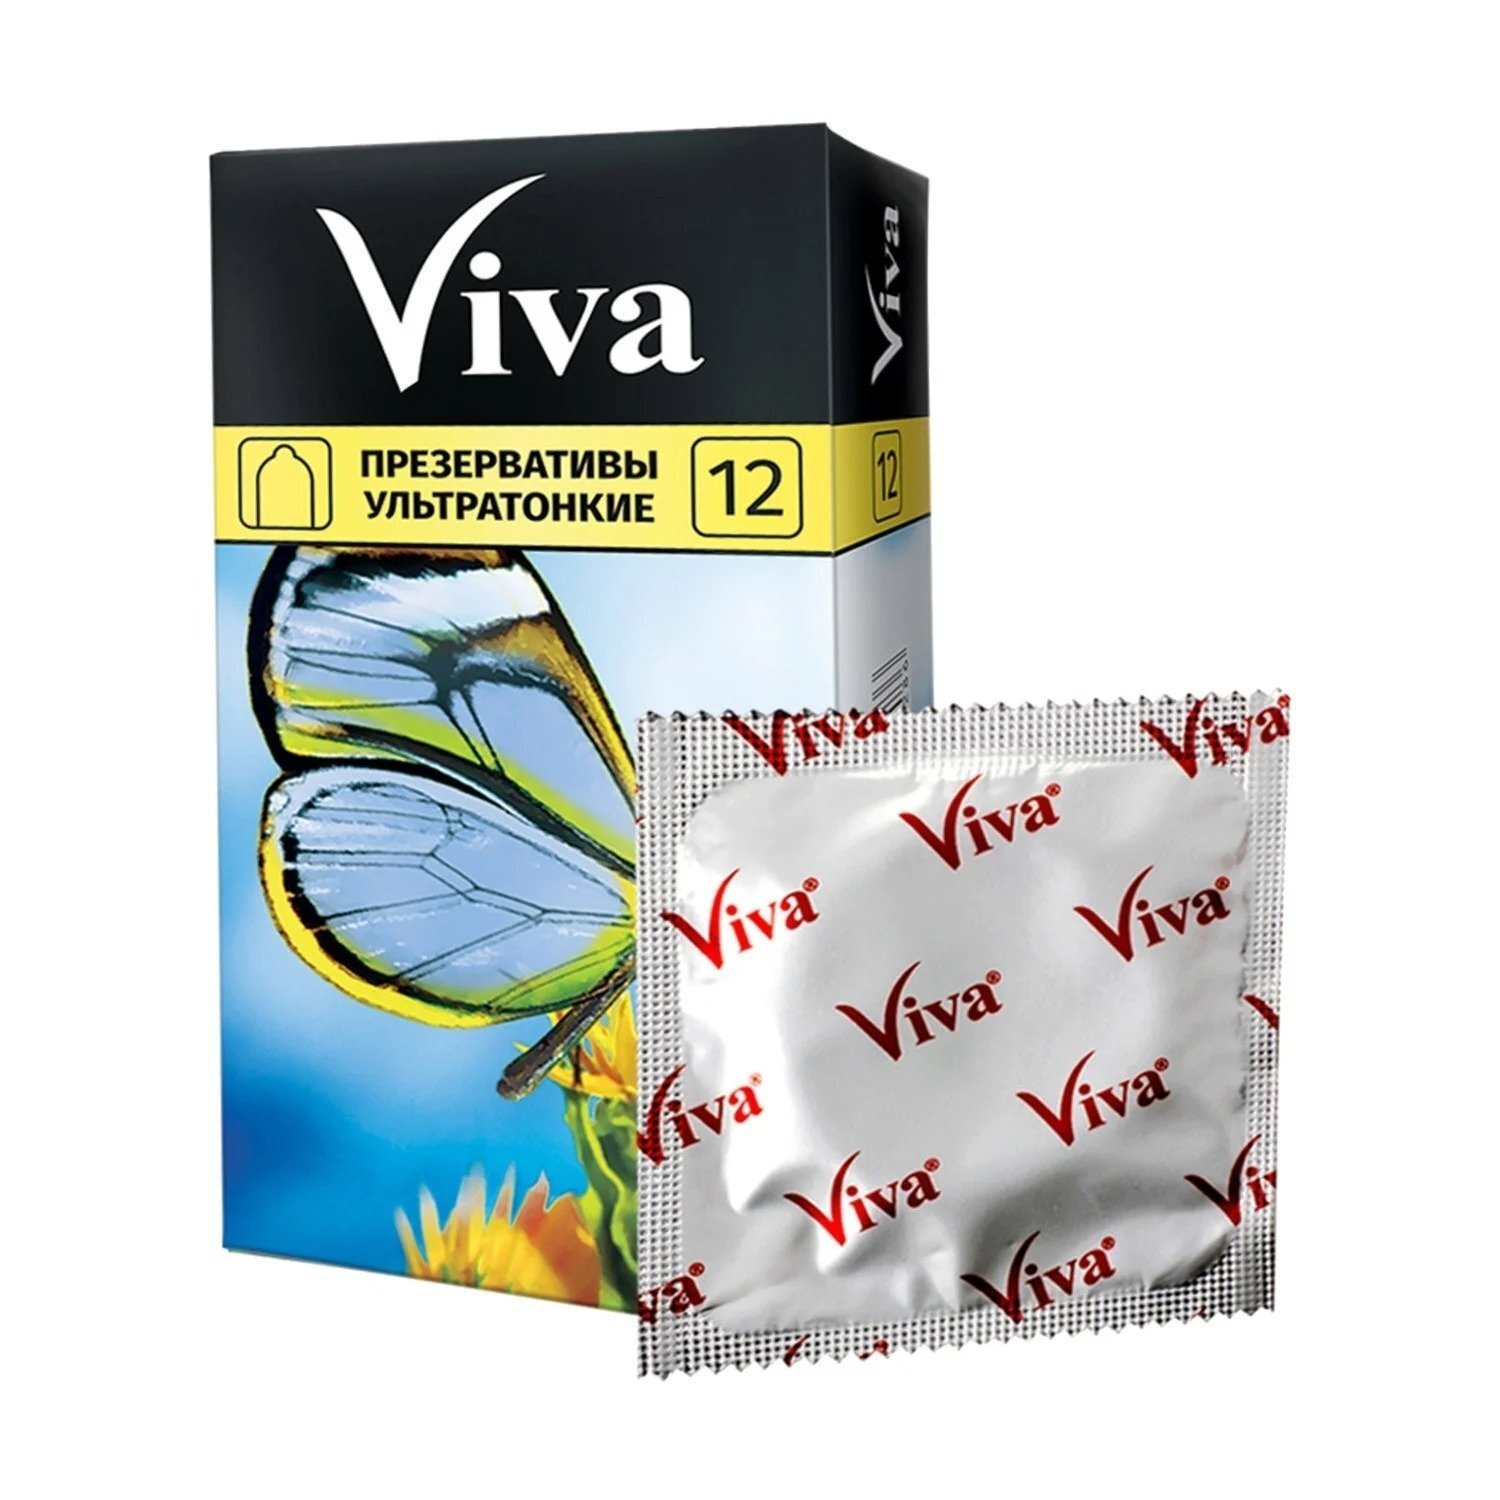 Презерватив VIVA №12 ультратонкие фото 